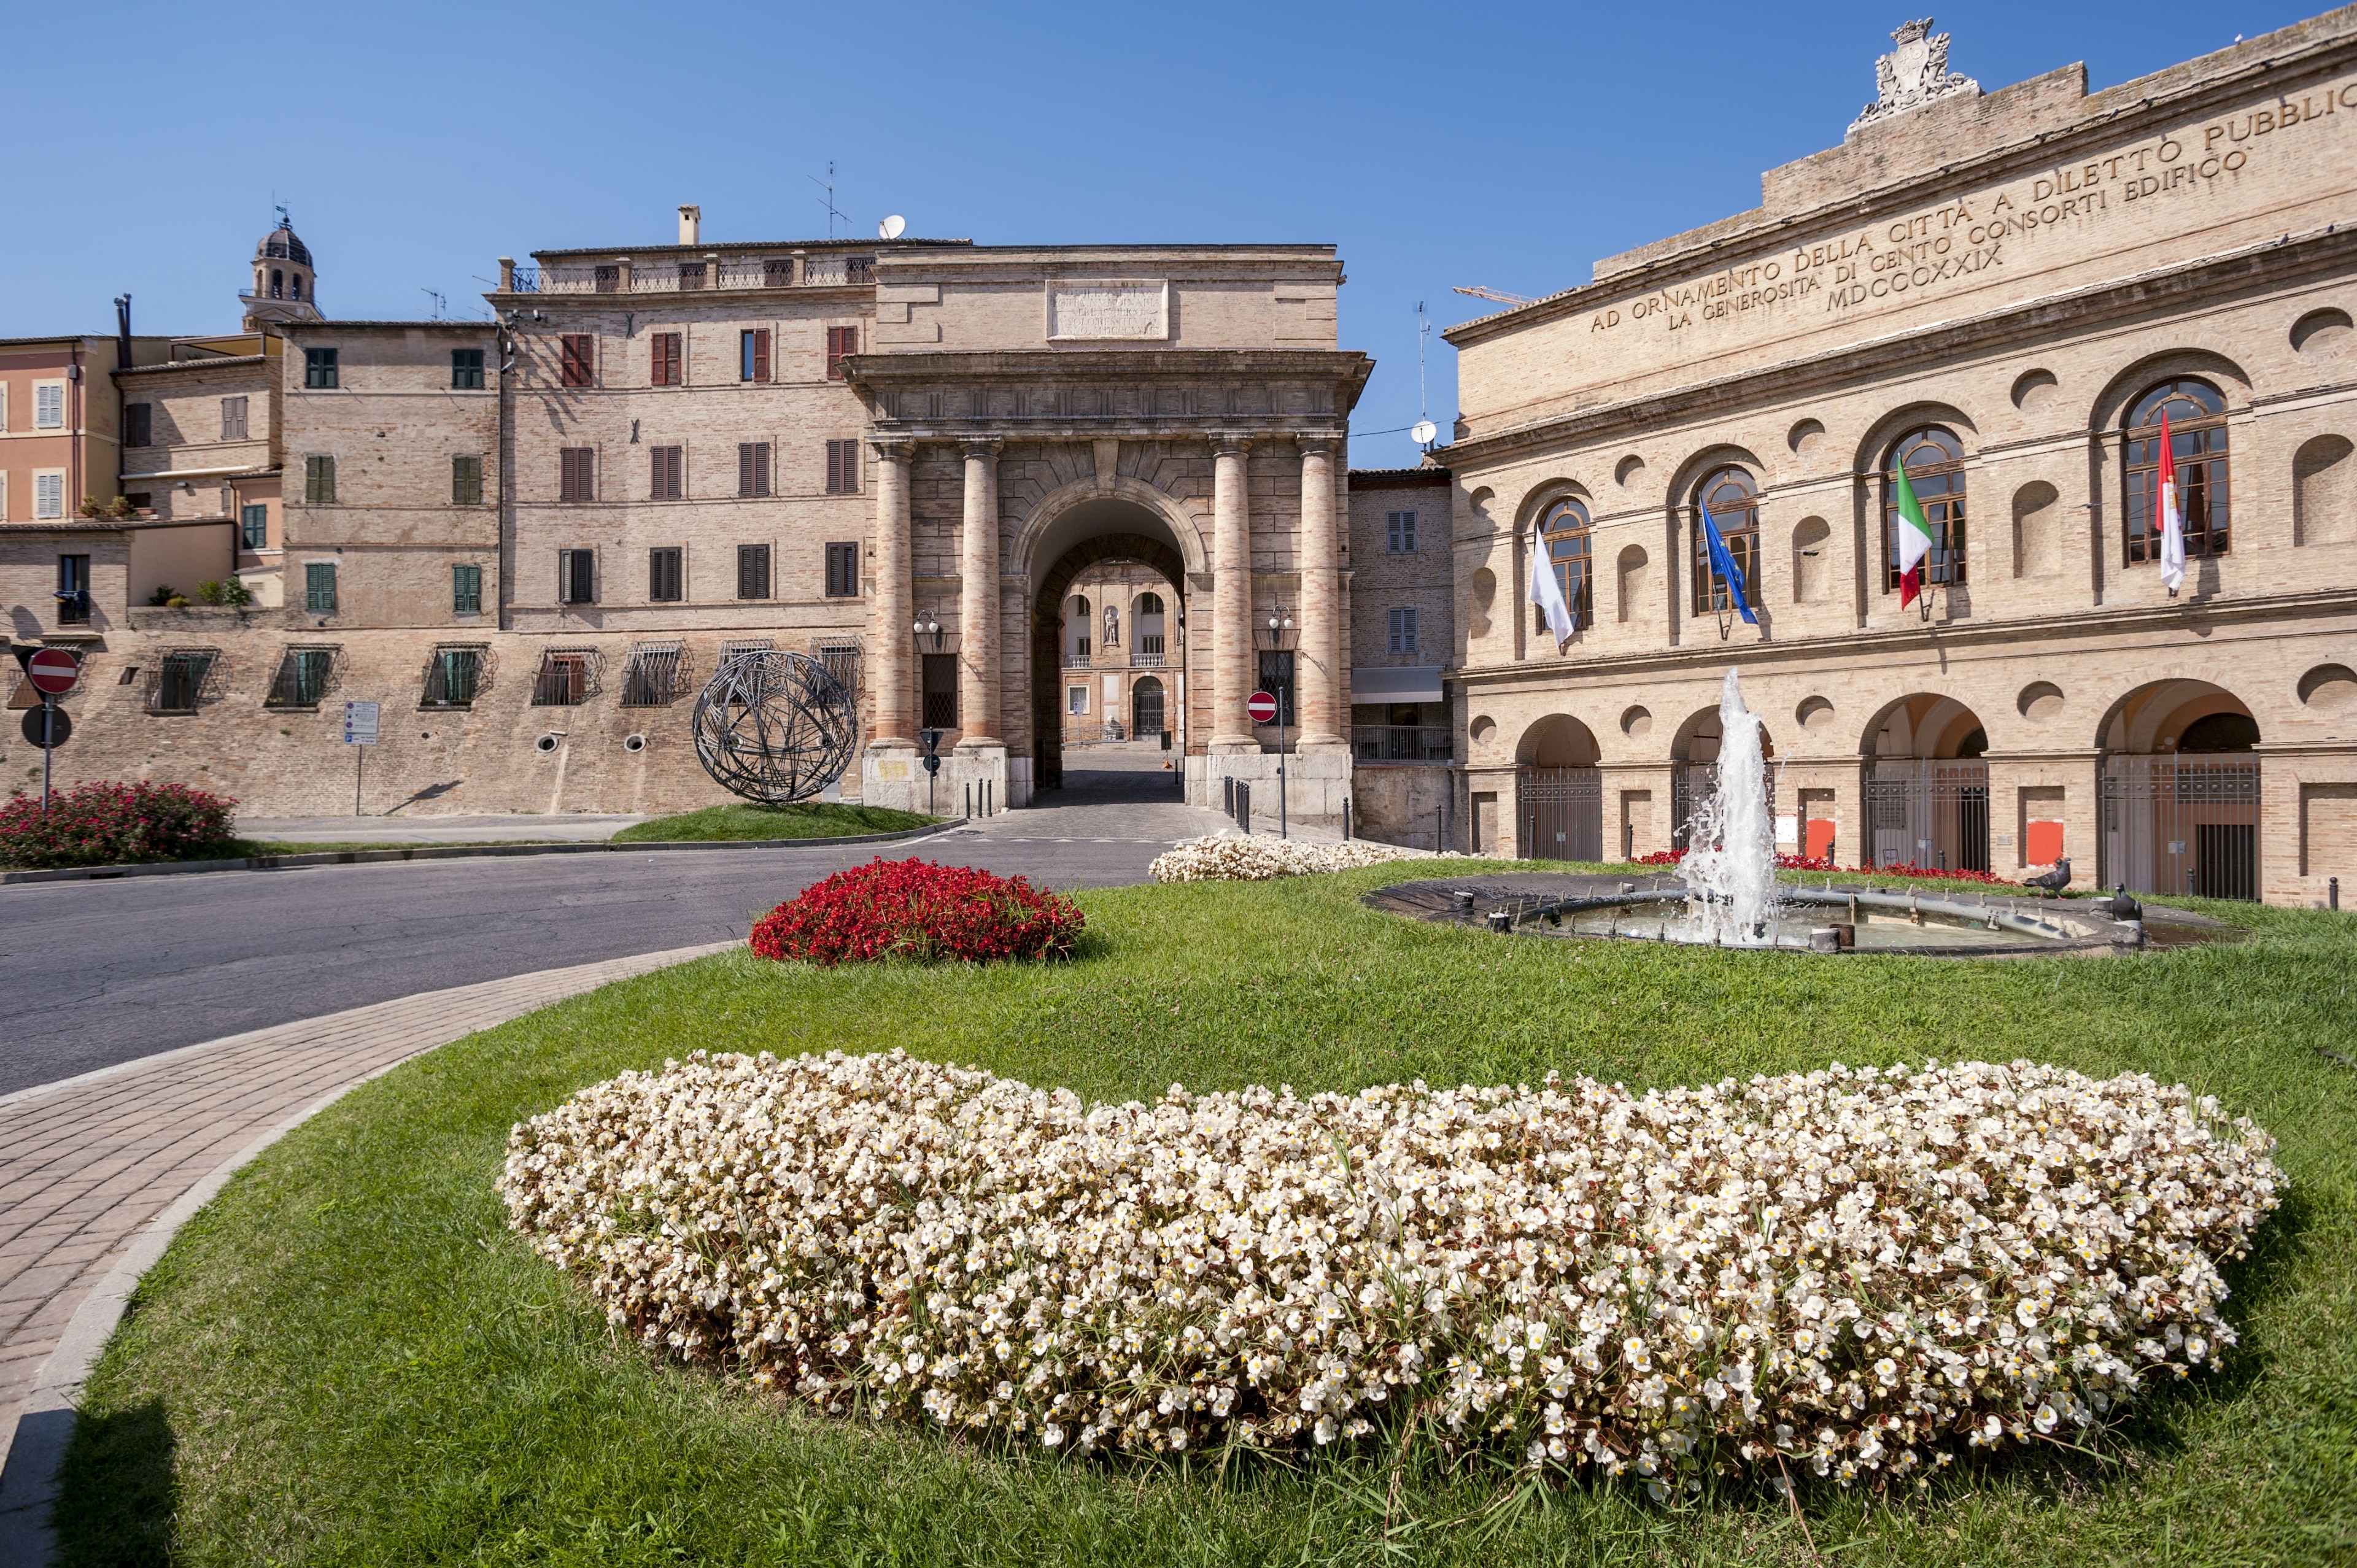 Province of Macerata, Marche, Italy